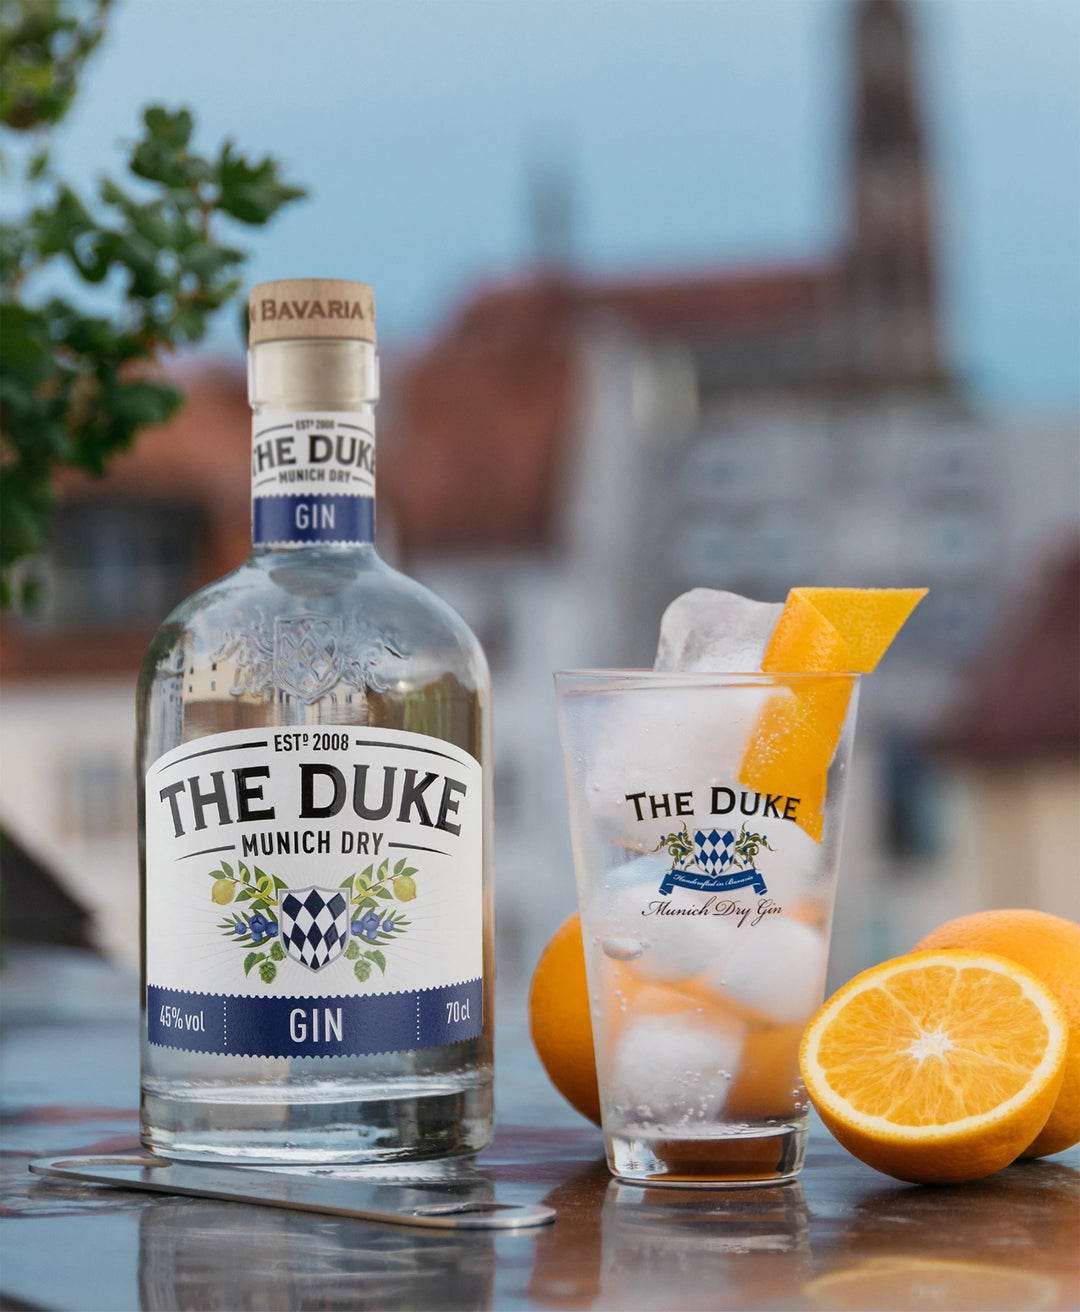 THE DUKE Gin - Munich Dry Gin | Handmade from Munich